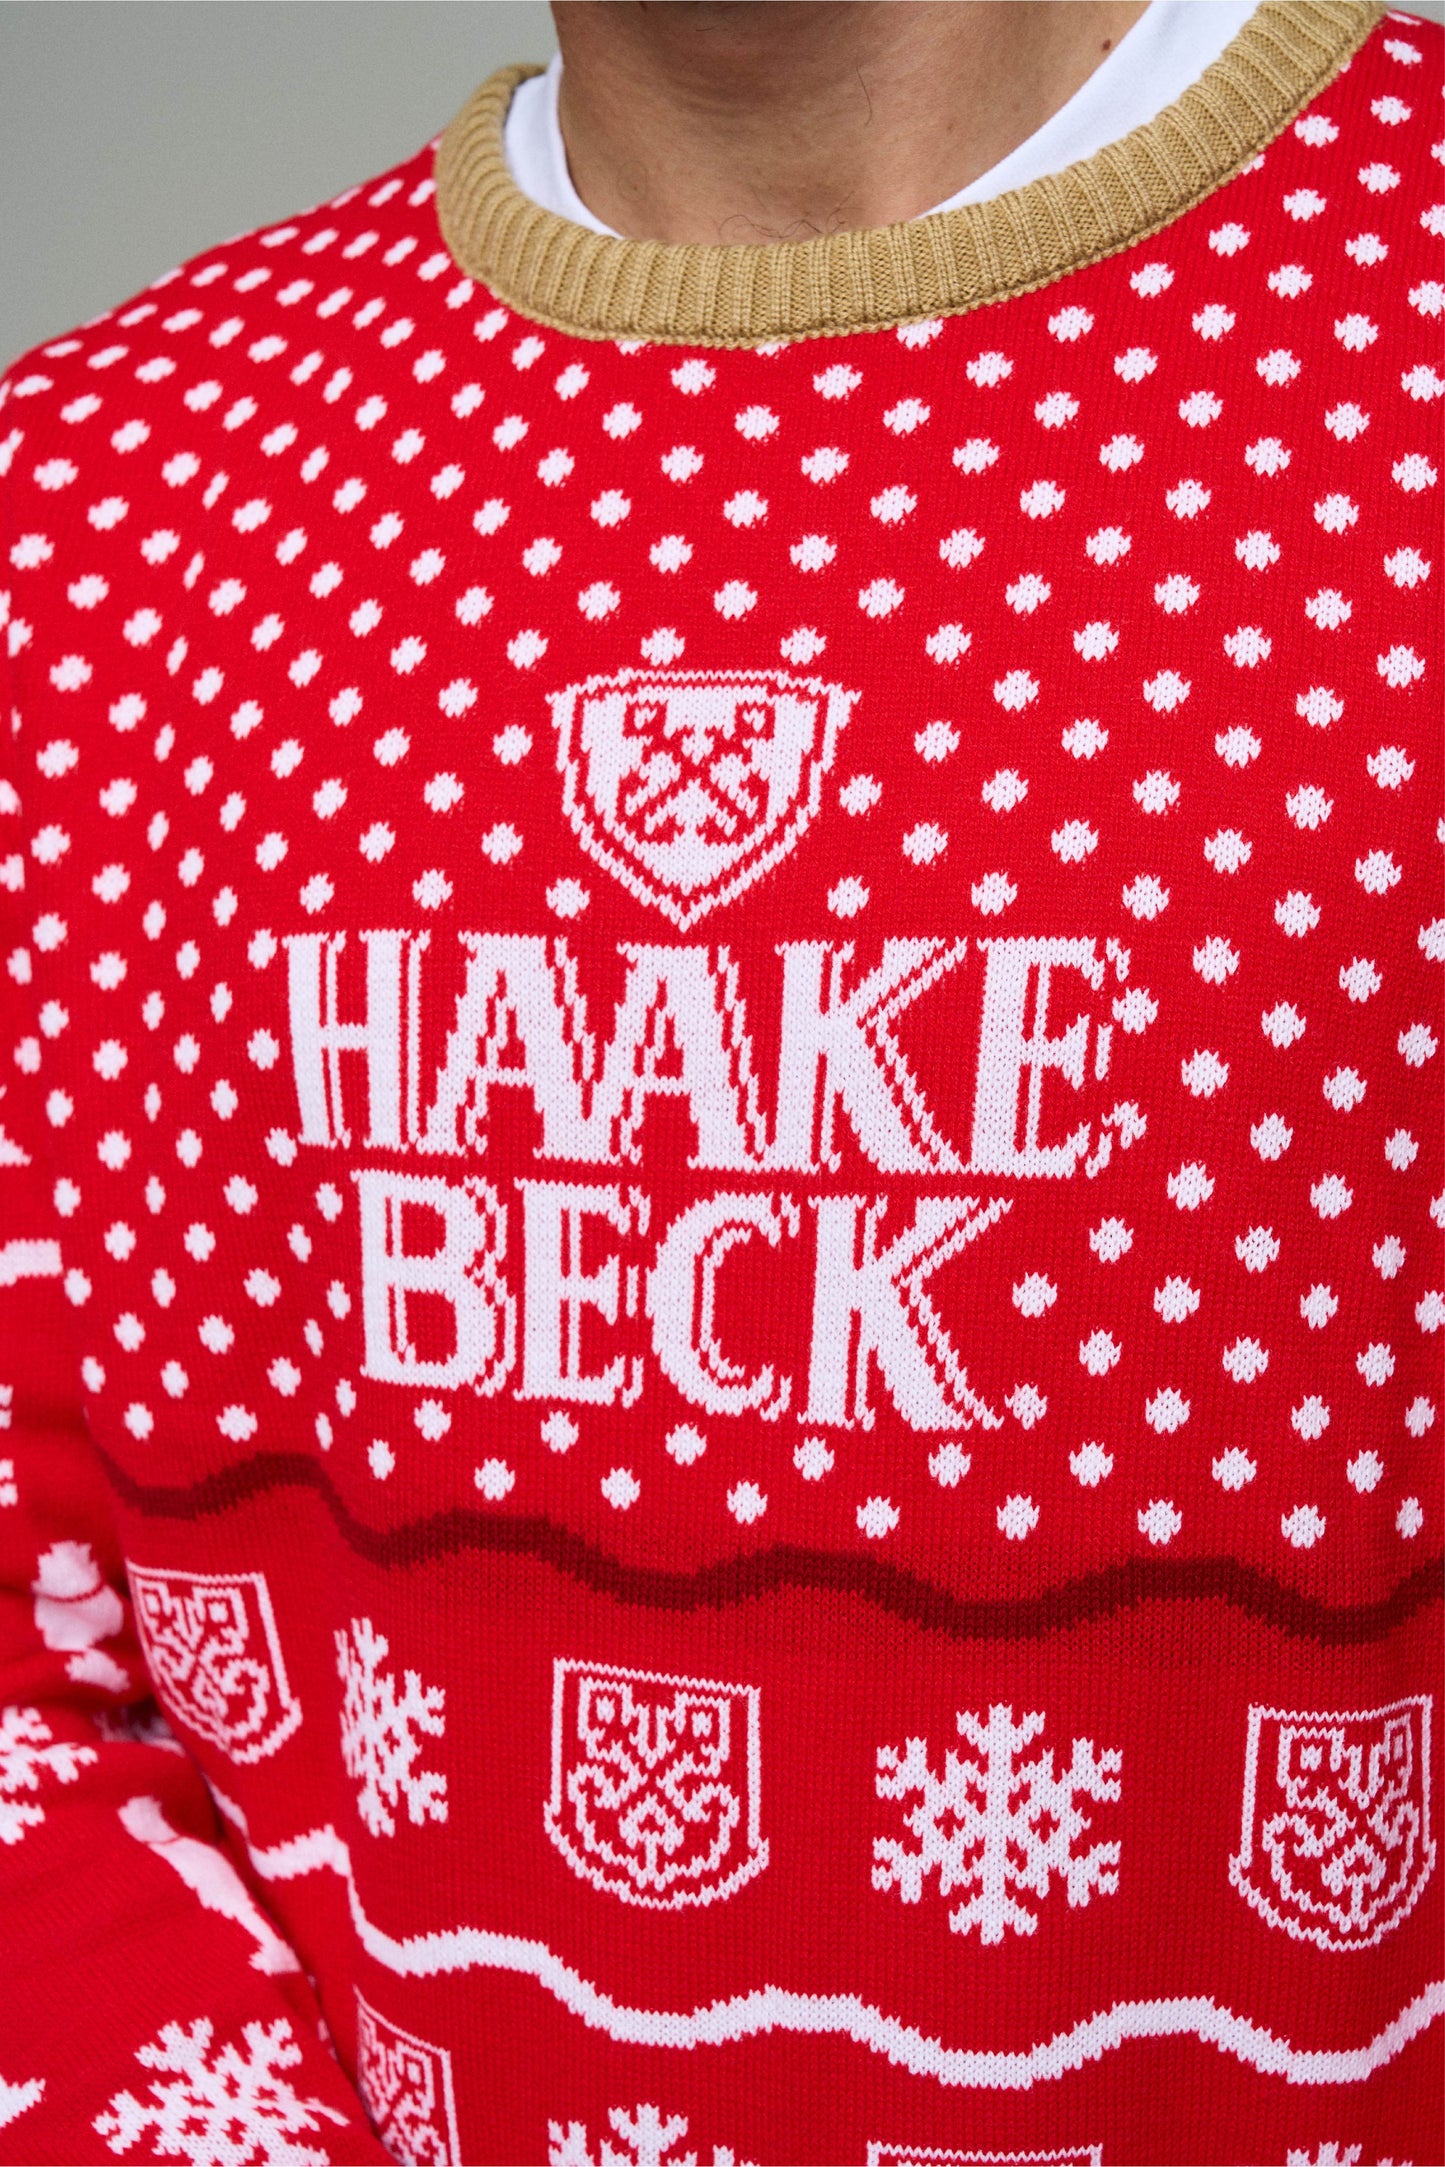 Haake-Beck Christmas Sweater